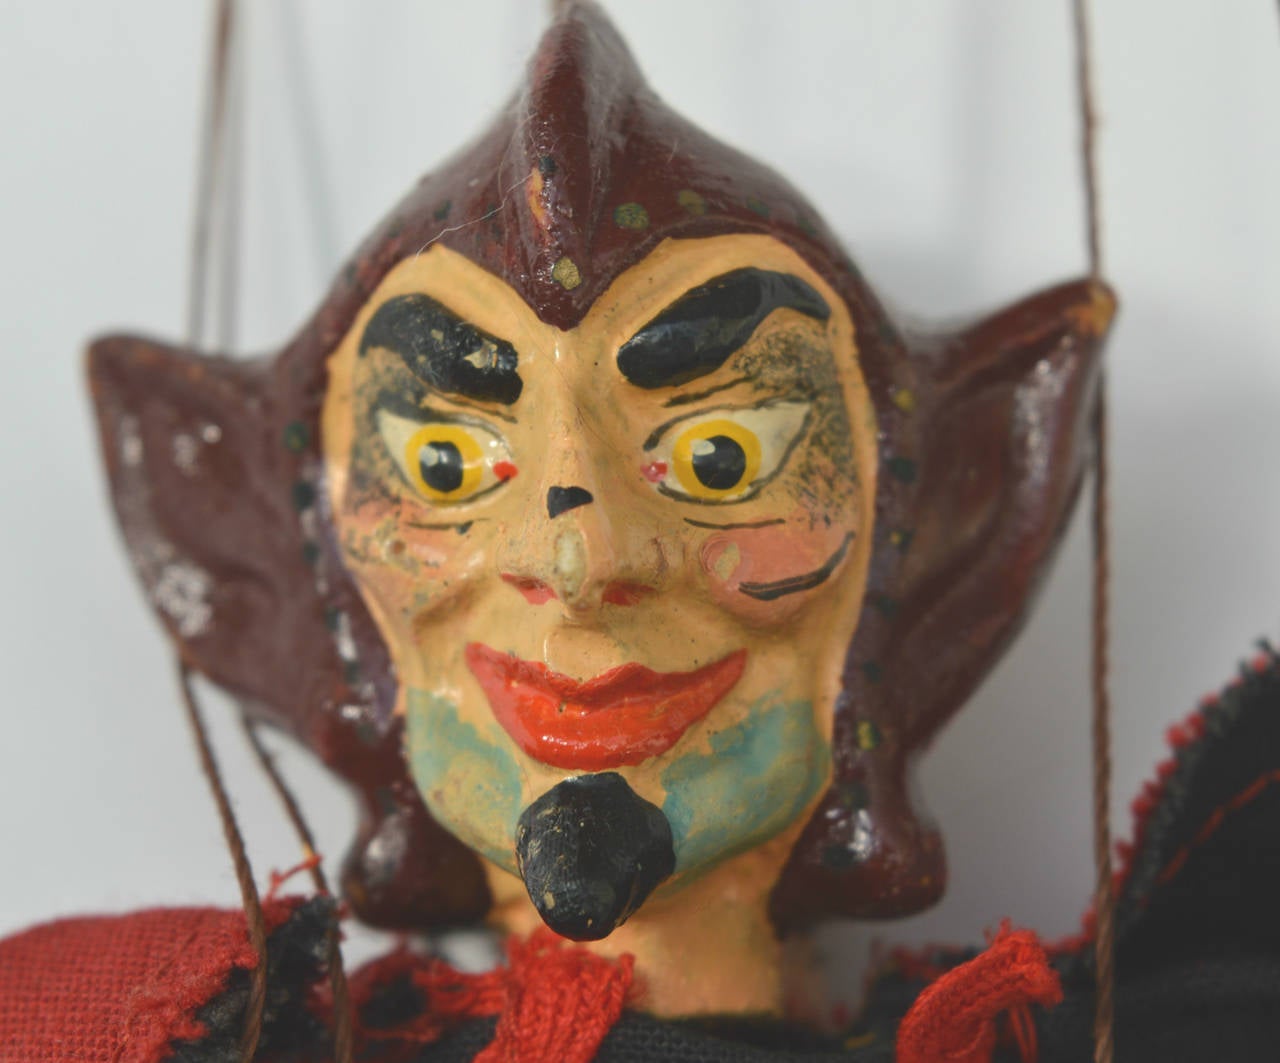 Czech Devil Marionette by the Master Puppet Maker of Prague, Milos Kasal, 1940s